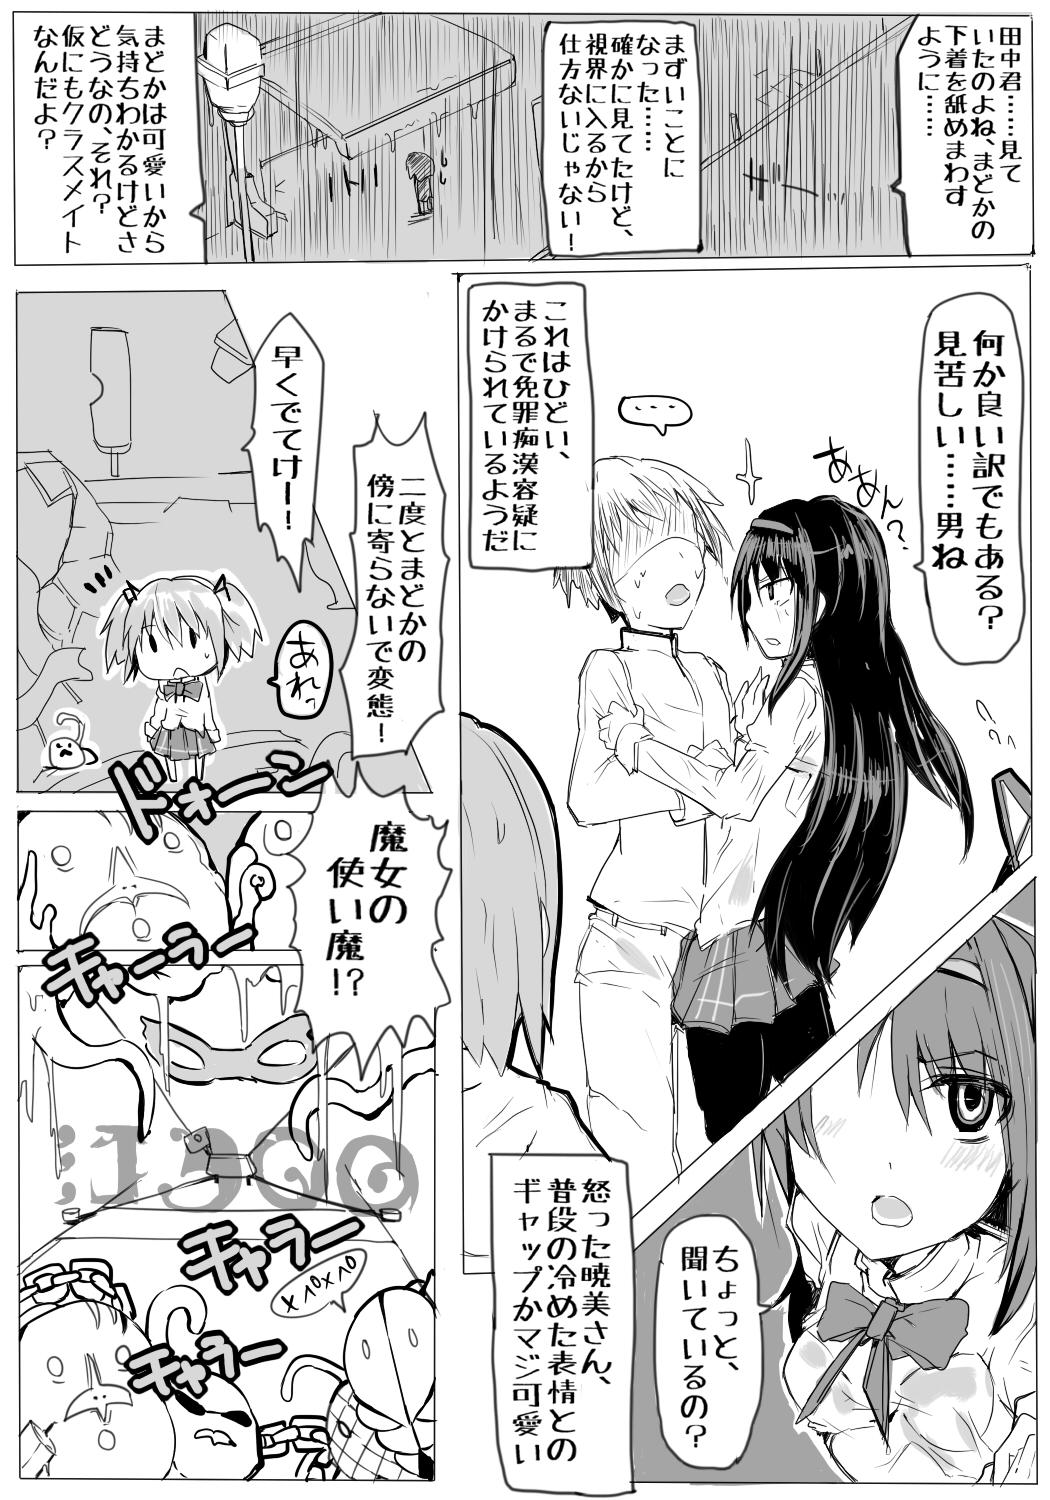 Hermana 魔法少女まどか☆マギカと田中 - Puella magi madoka magica Point Of View - Page 3